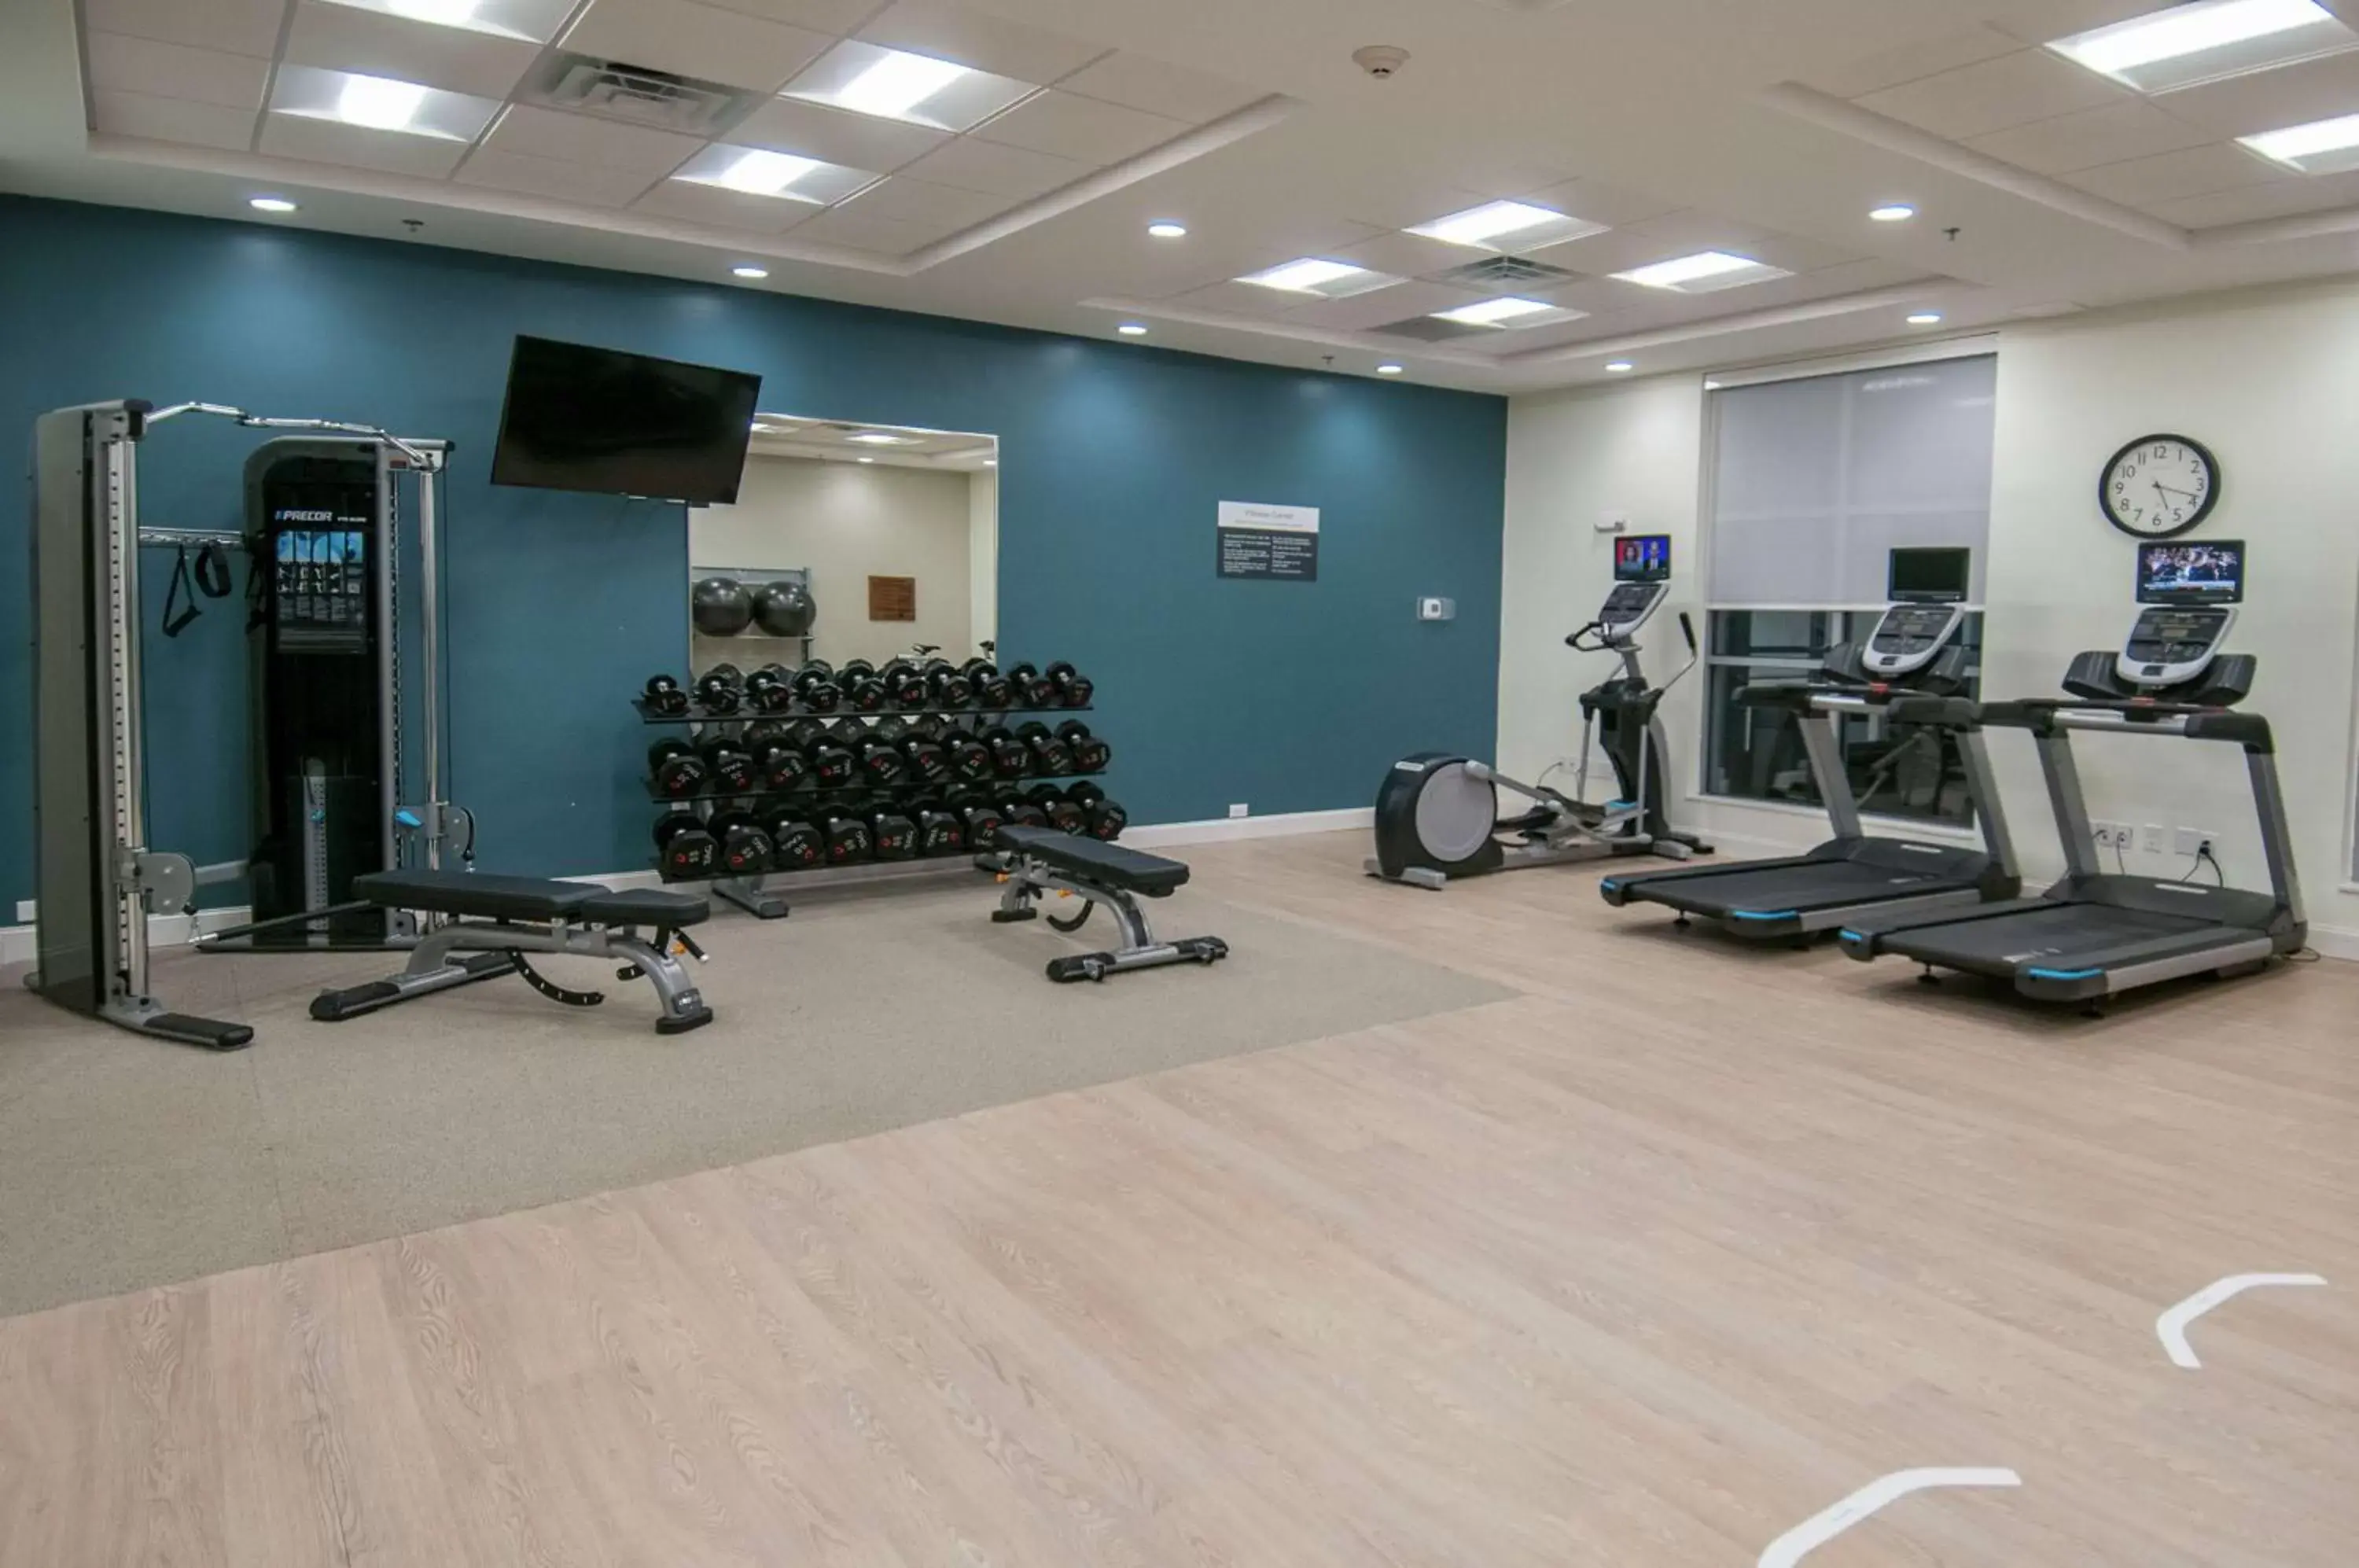 Fitness centre/facilities, Fitness Center/Facilities in Hilton Garden Inn Jackson/Clinton